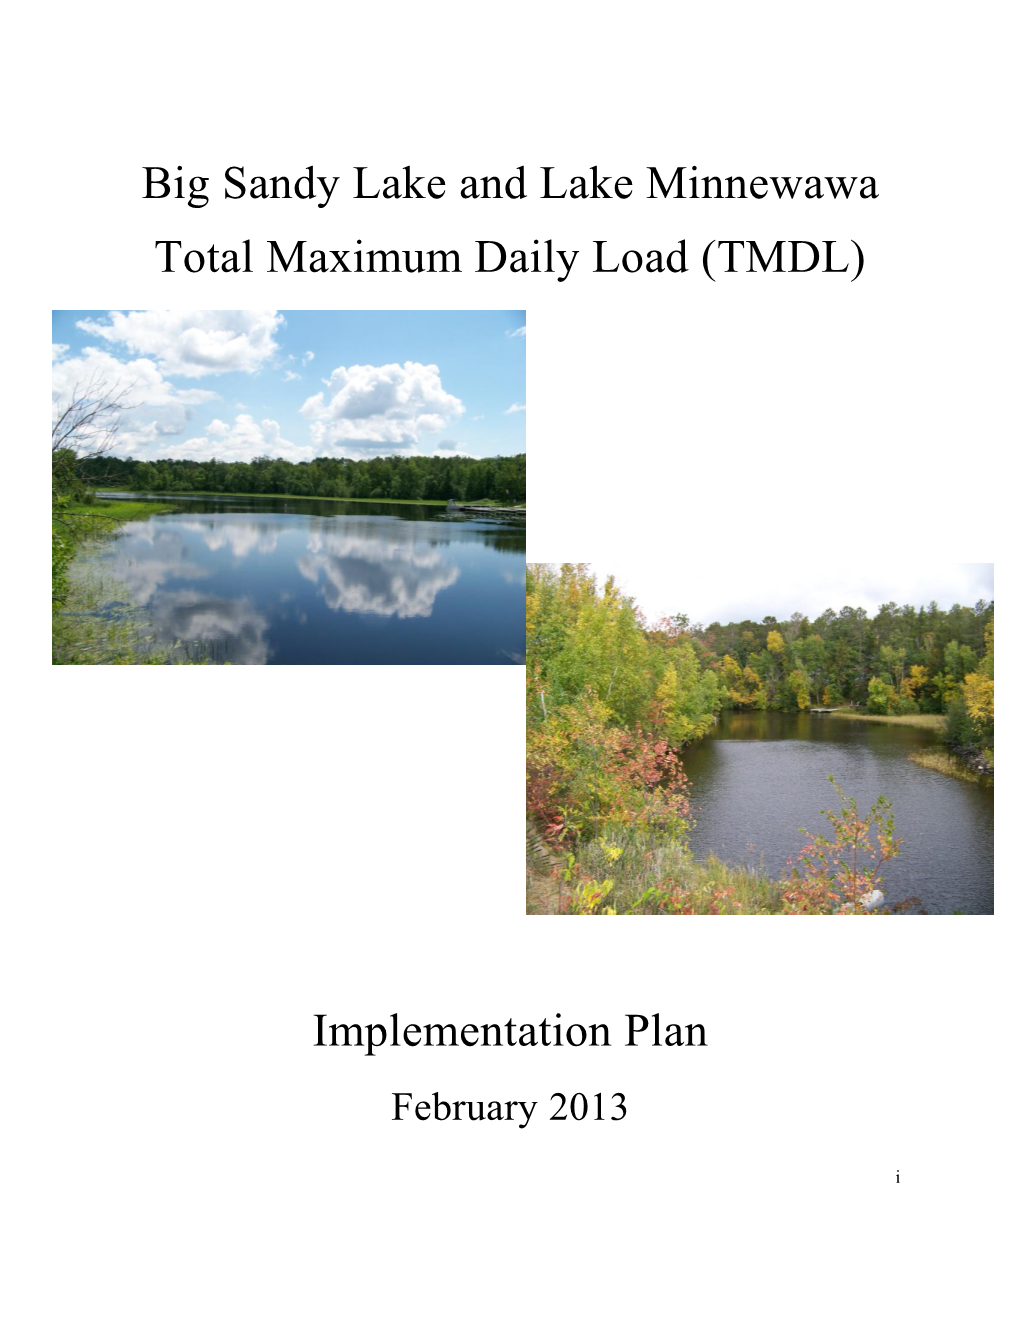 TMDL Implementation Plan